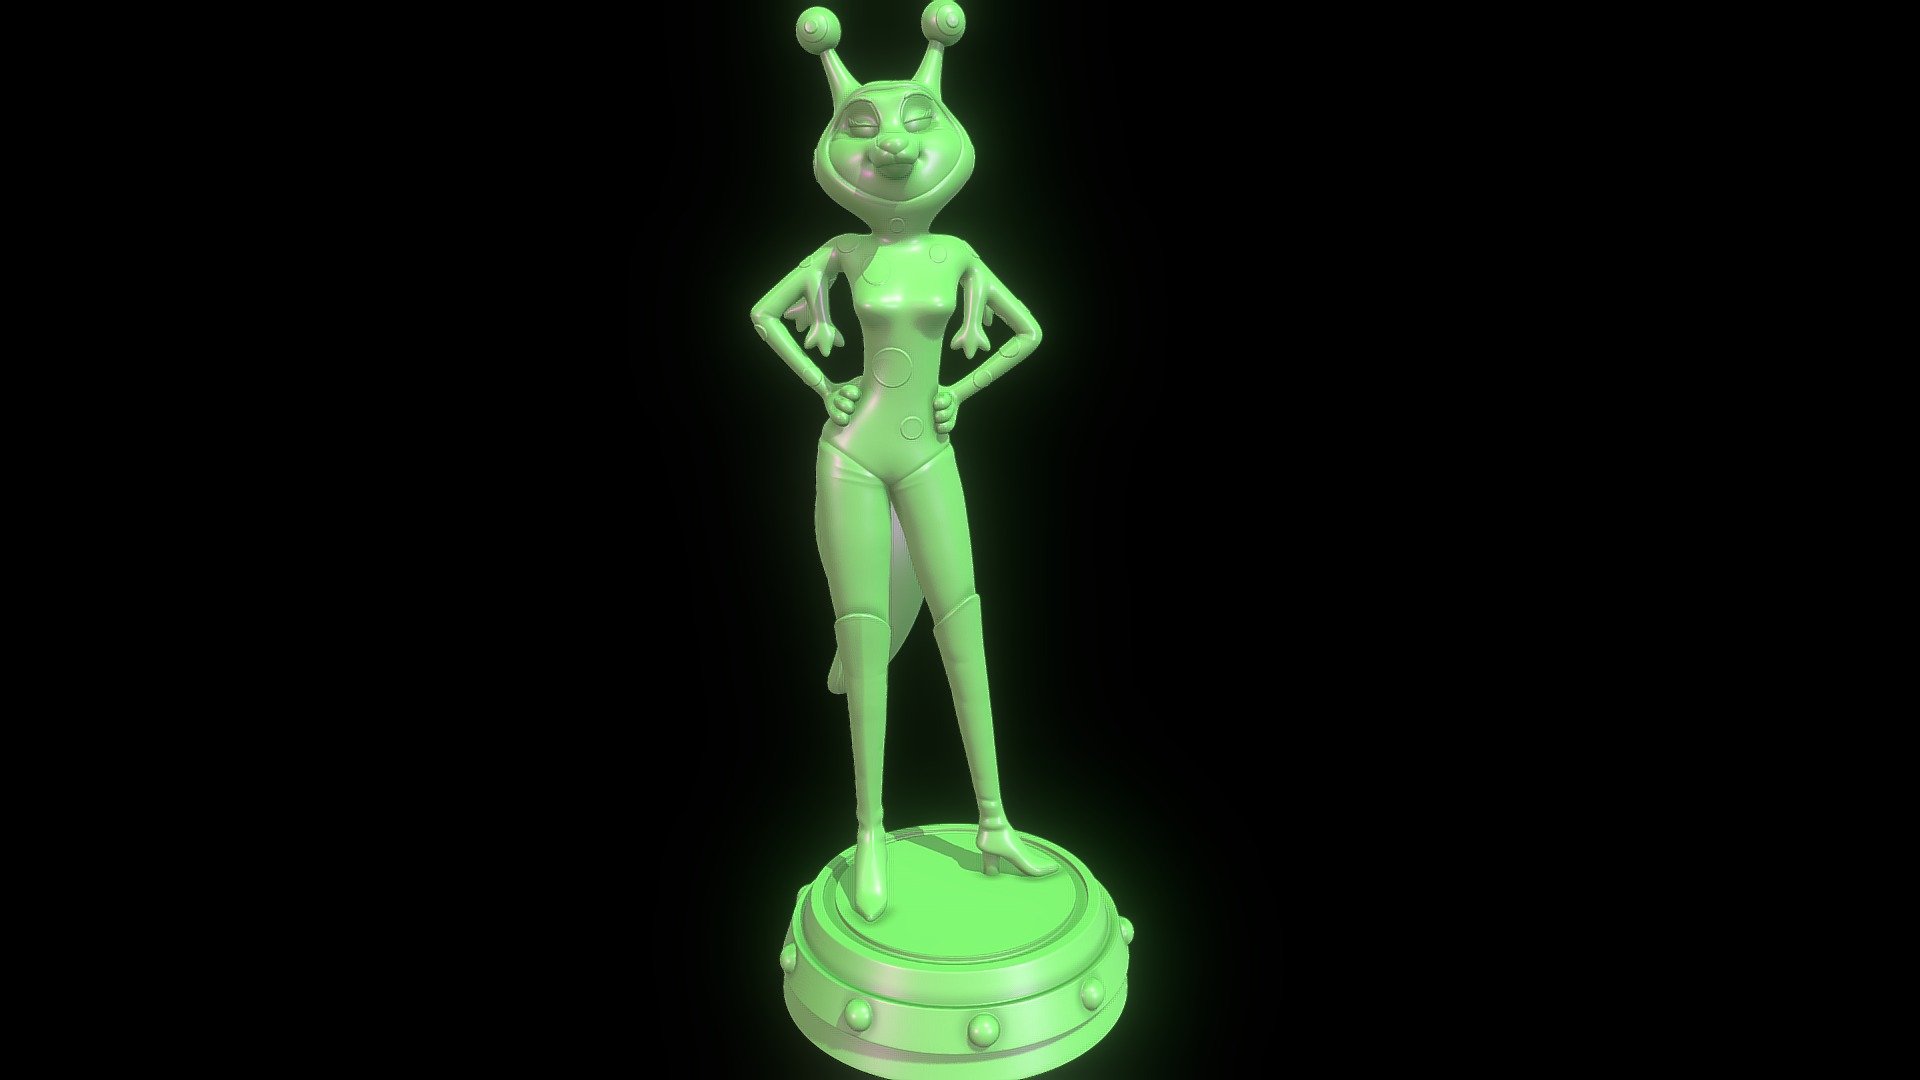 Porsha alien costume